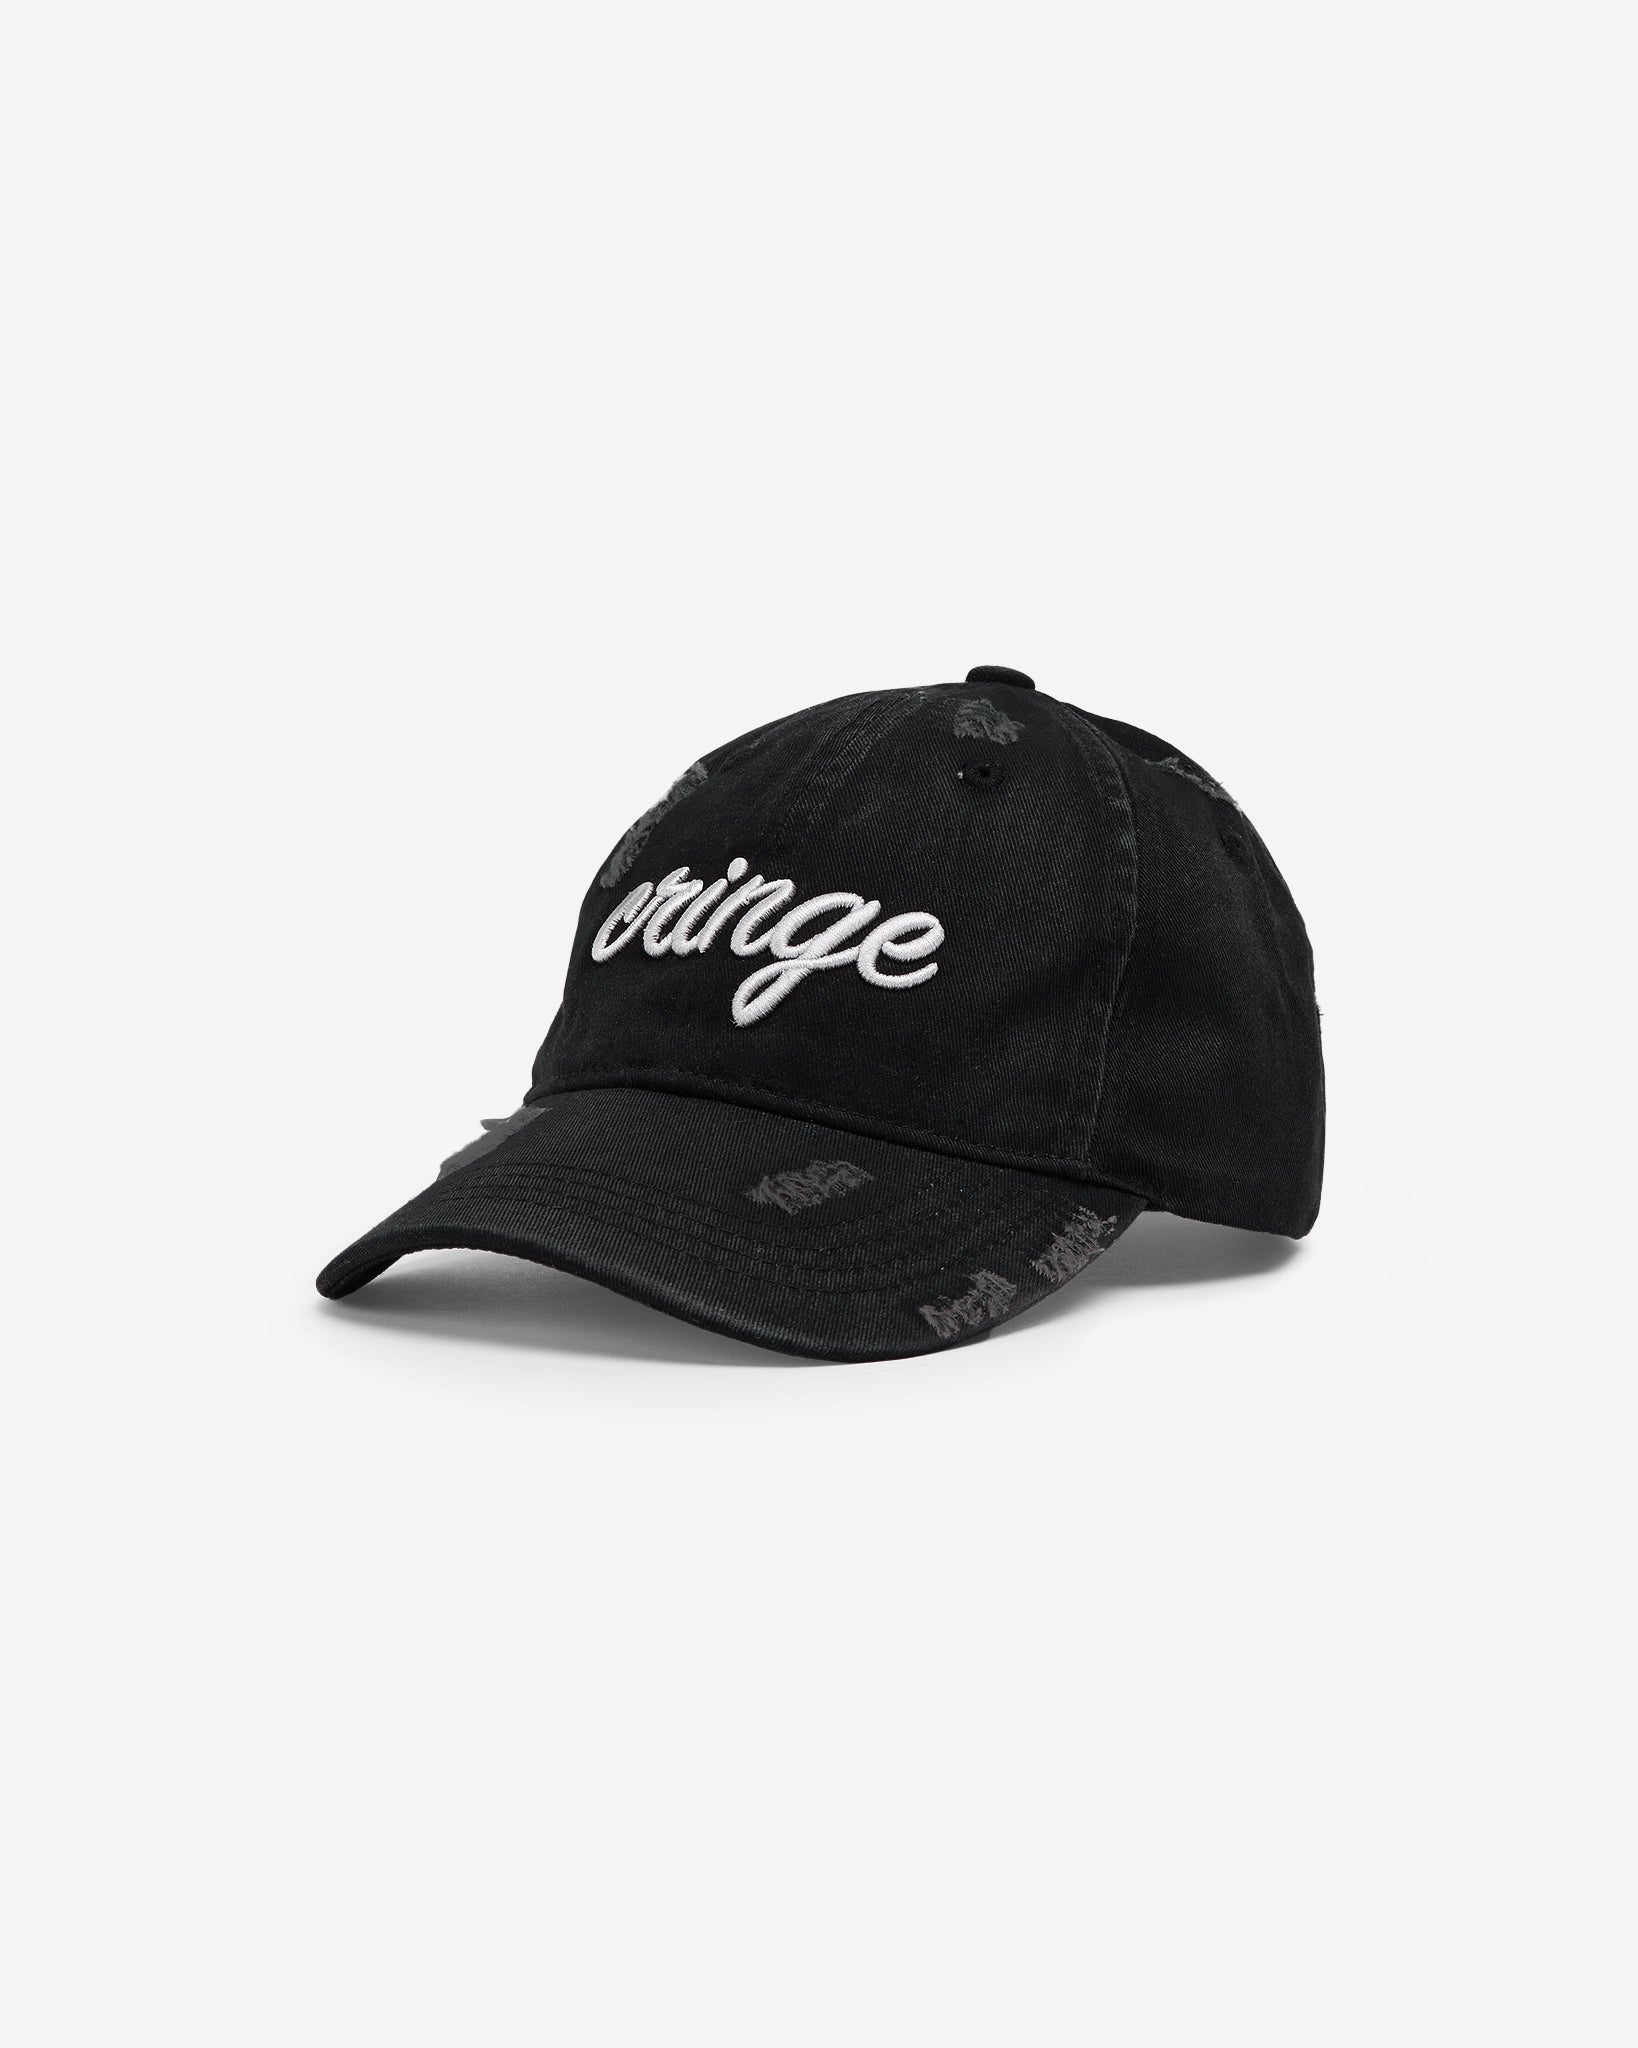 Cringe Baseball Hat : Unisex Hats Black | GCDS®